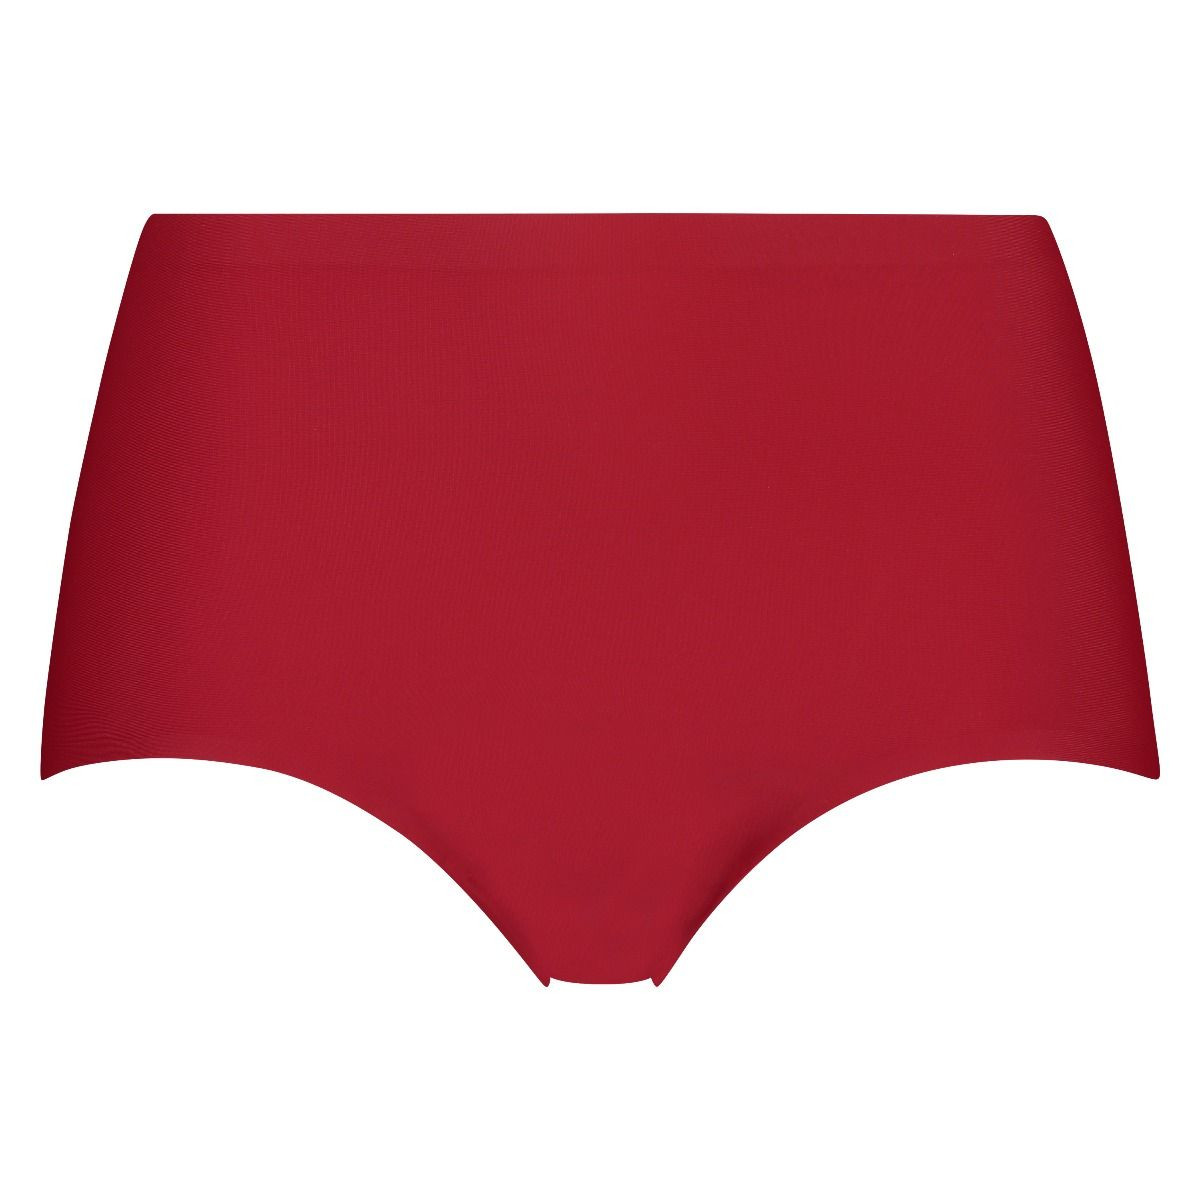 Onzichtbare RJ Dames Taille slip Pure Color Rood